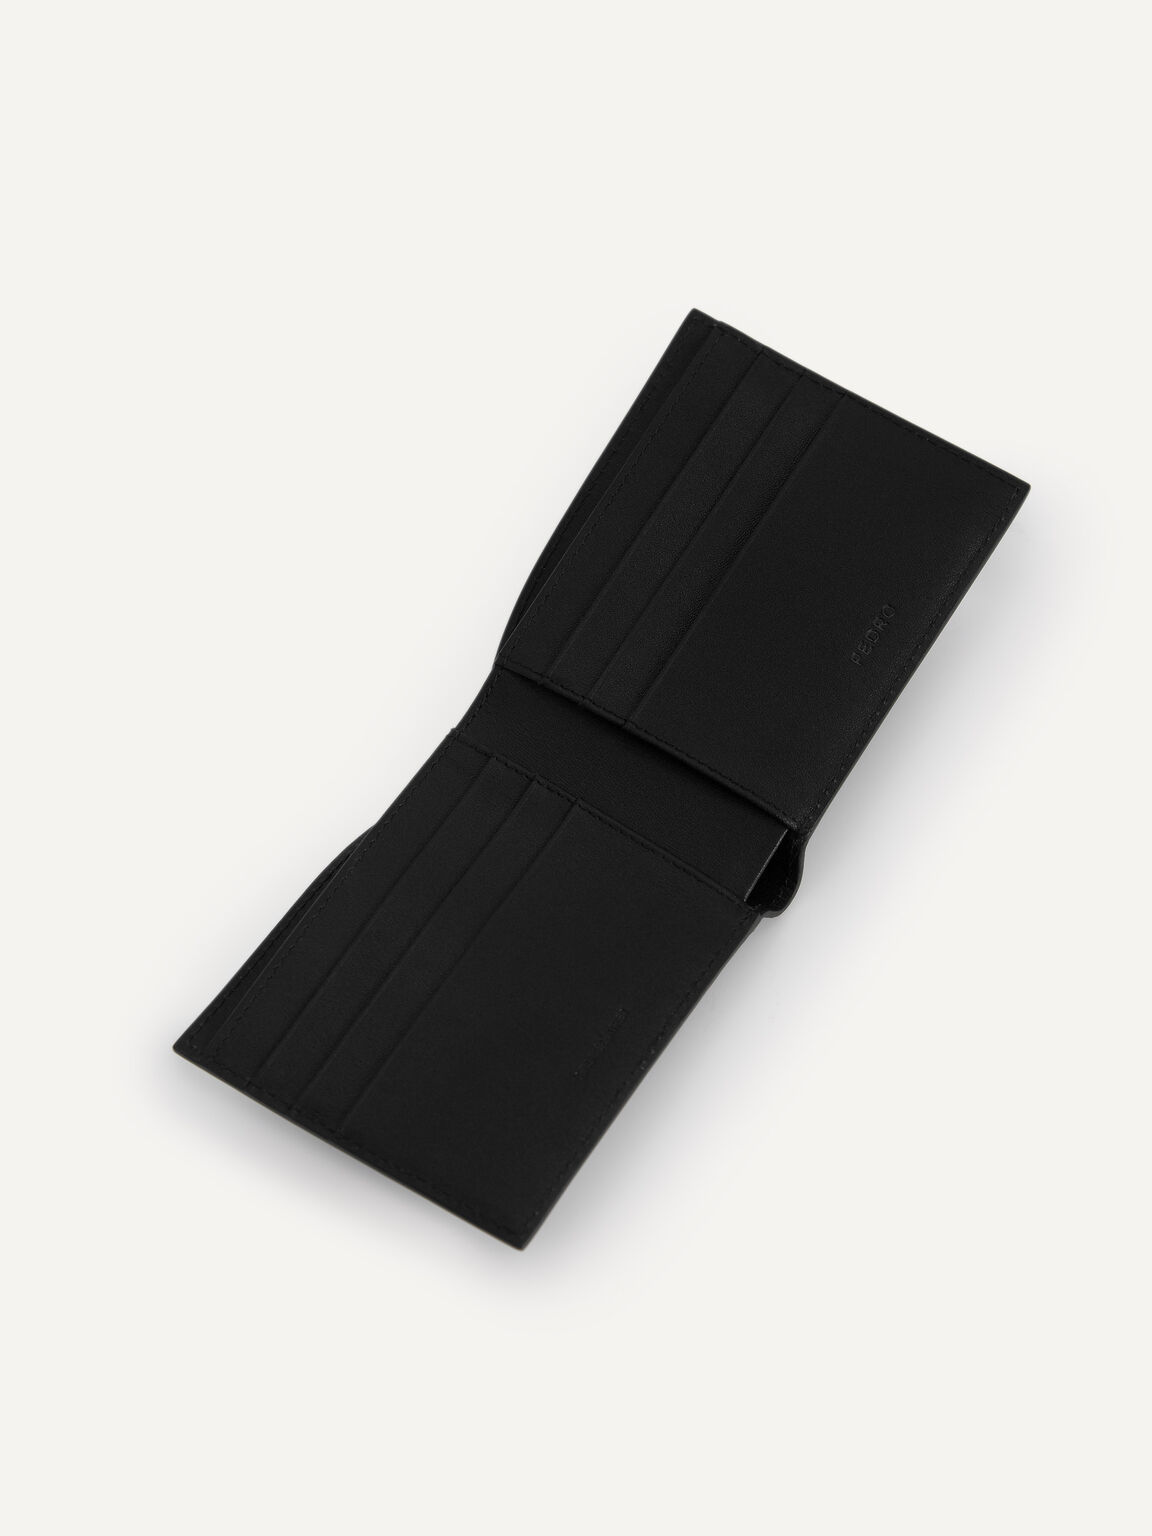 Black Textured Leather Bi-Fold Wallet With Insert - PEDRO EU